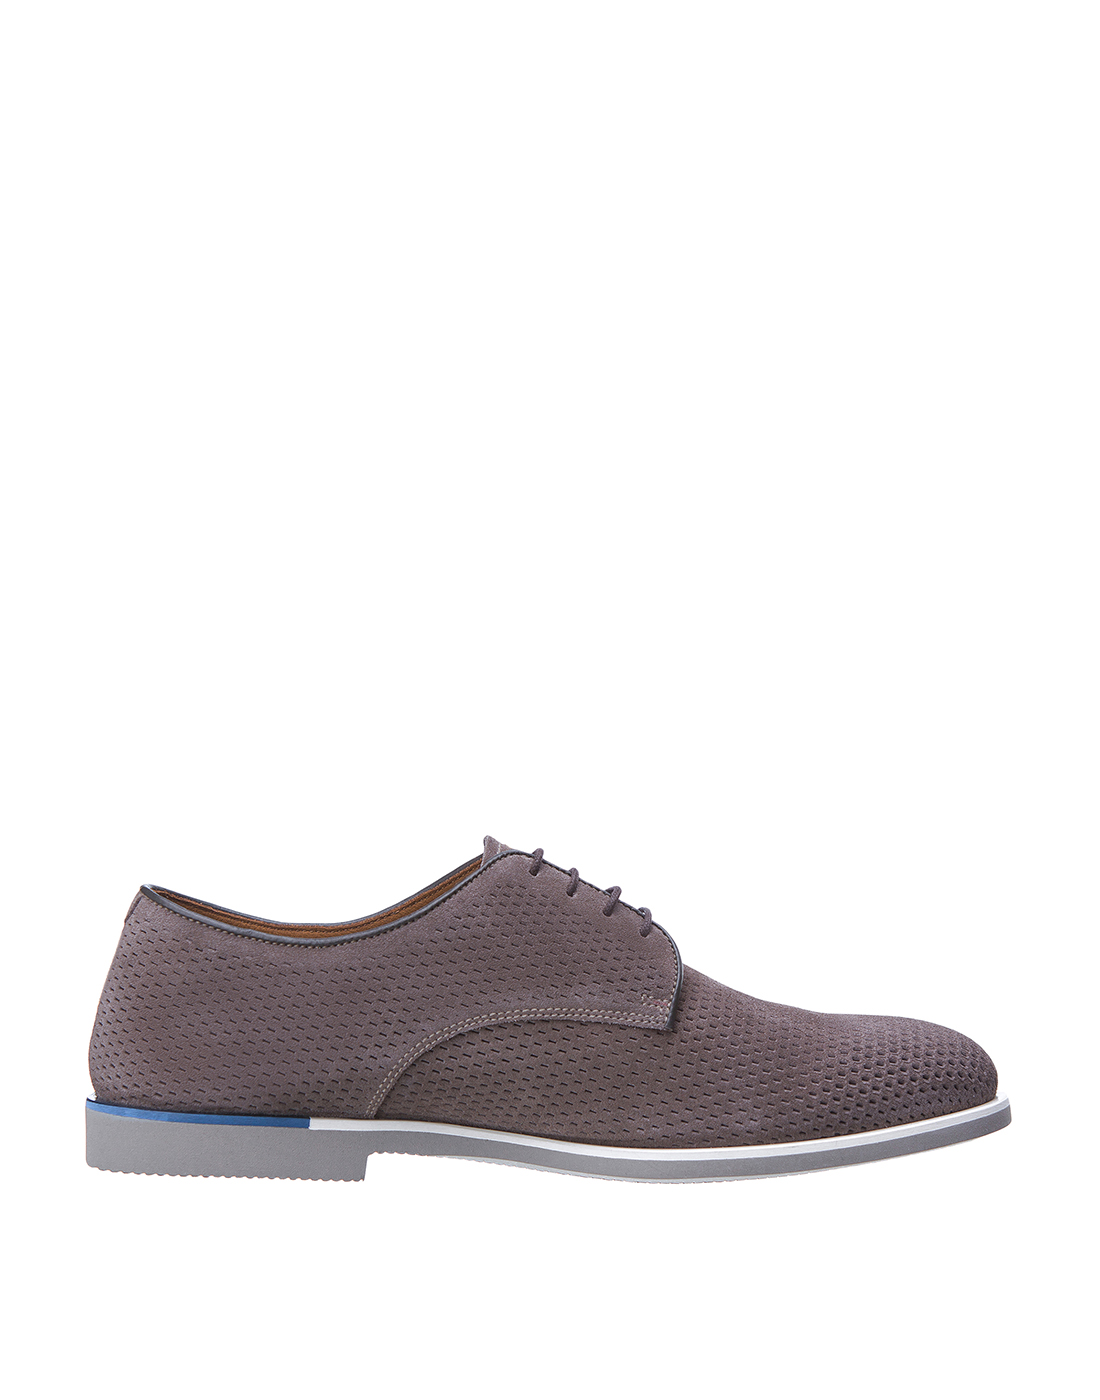 Туфли коричневые мужские Fratelli Rossetti S46029-1